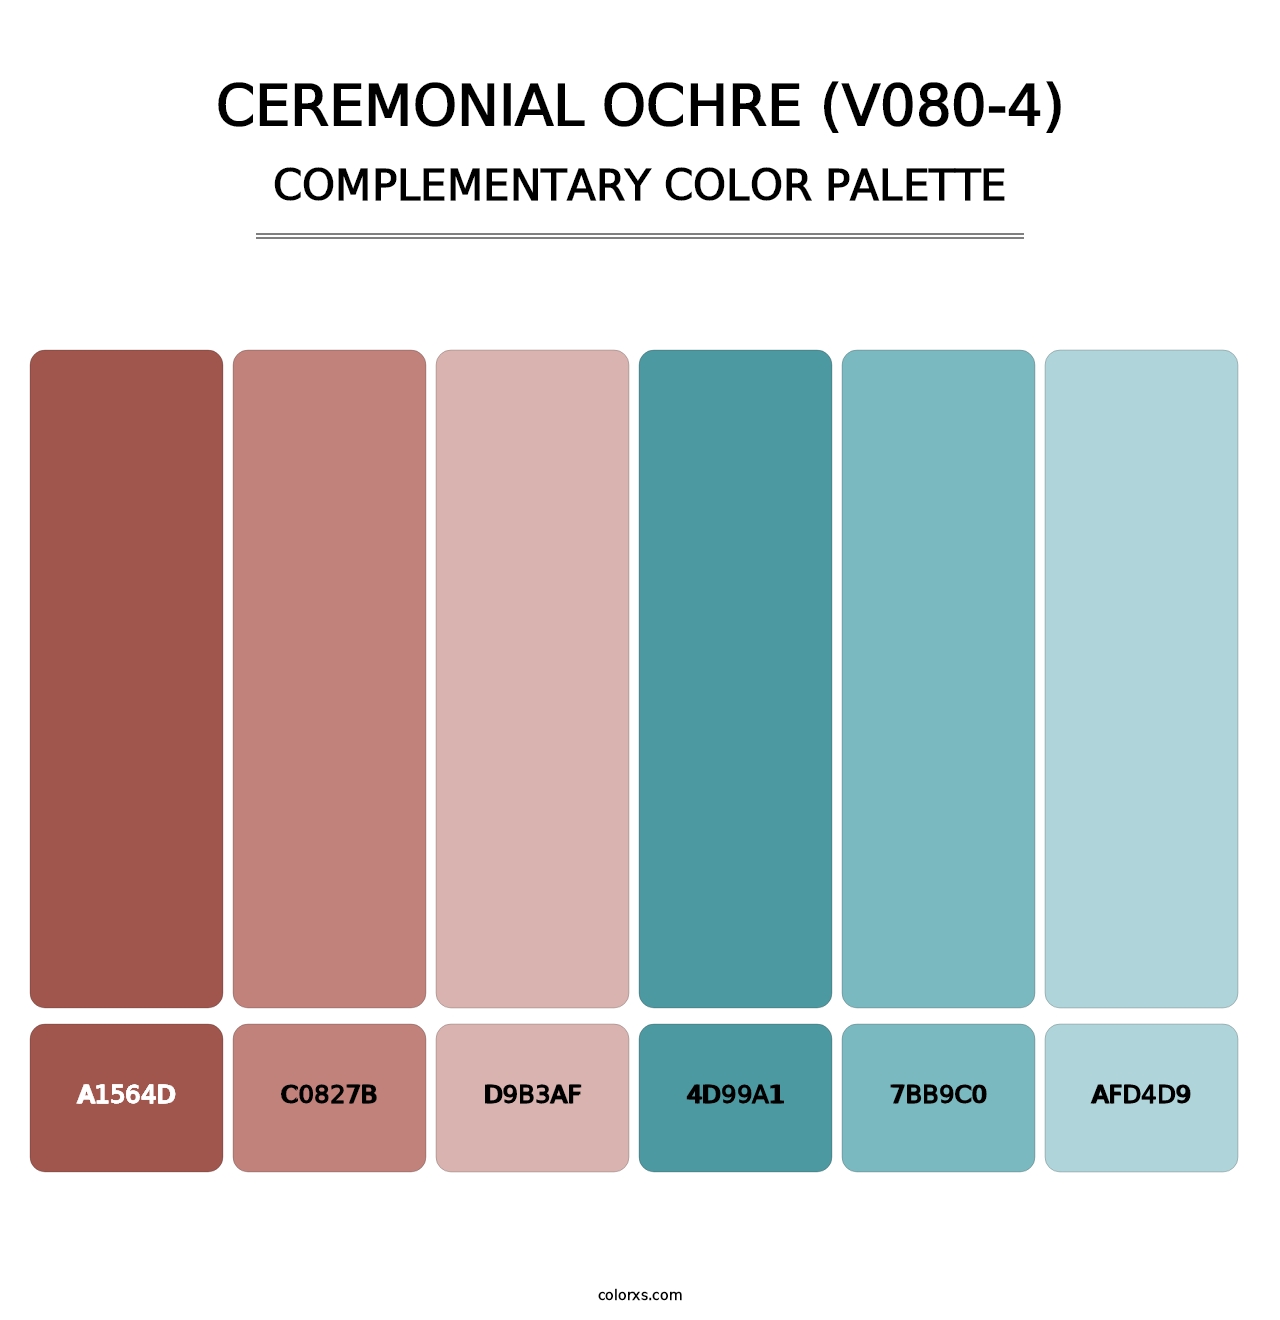 Ceremonial Ochre (V080-4) - Complementary Color Palette